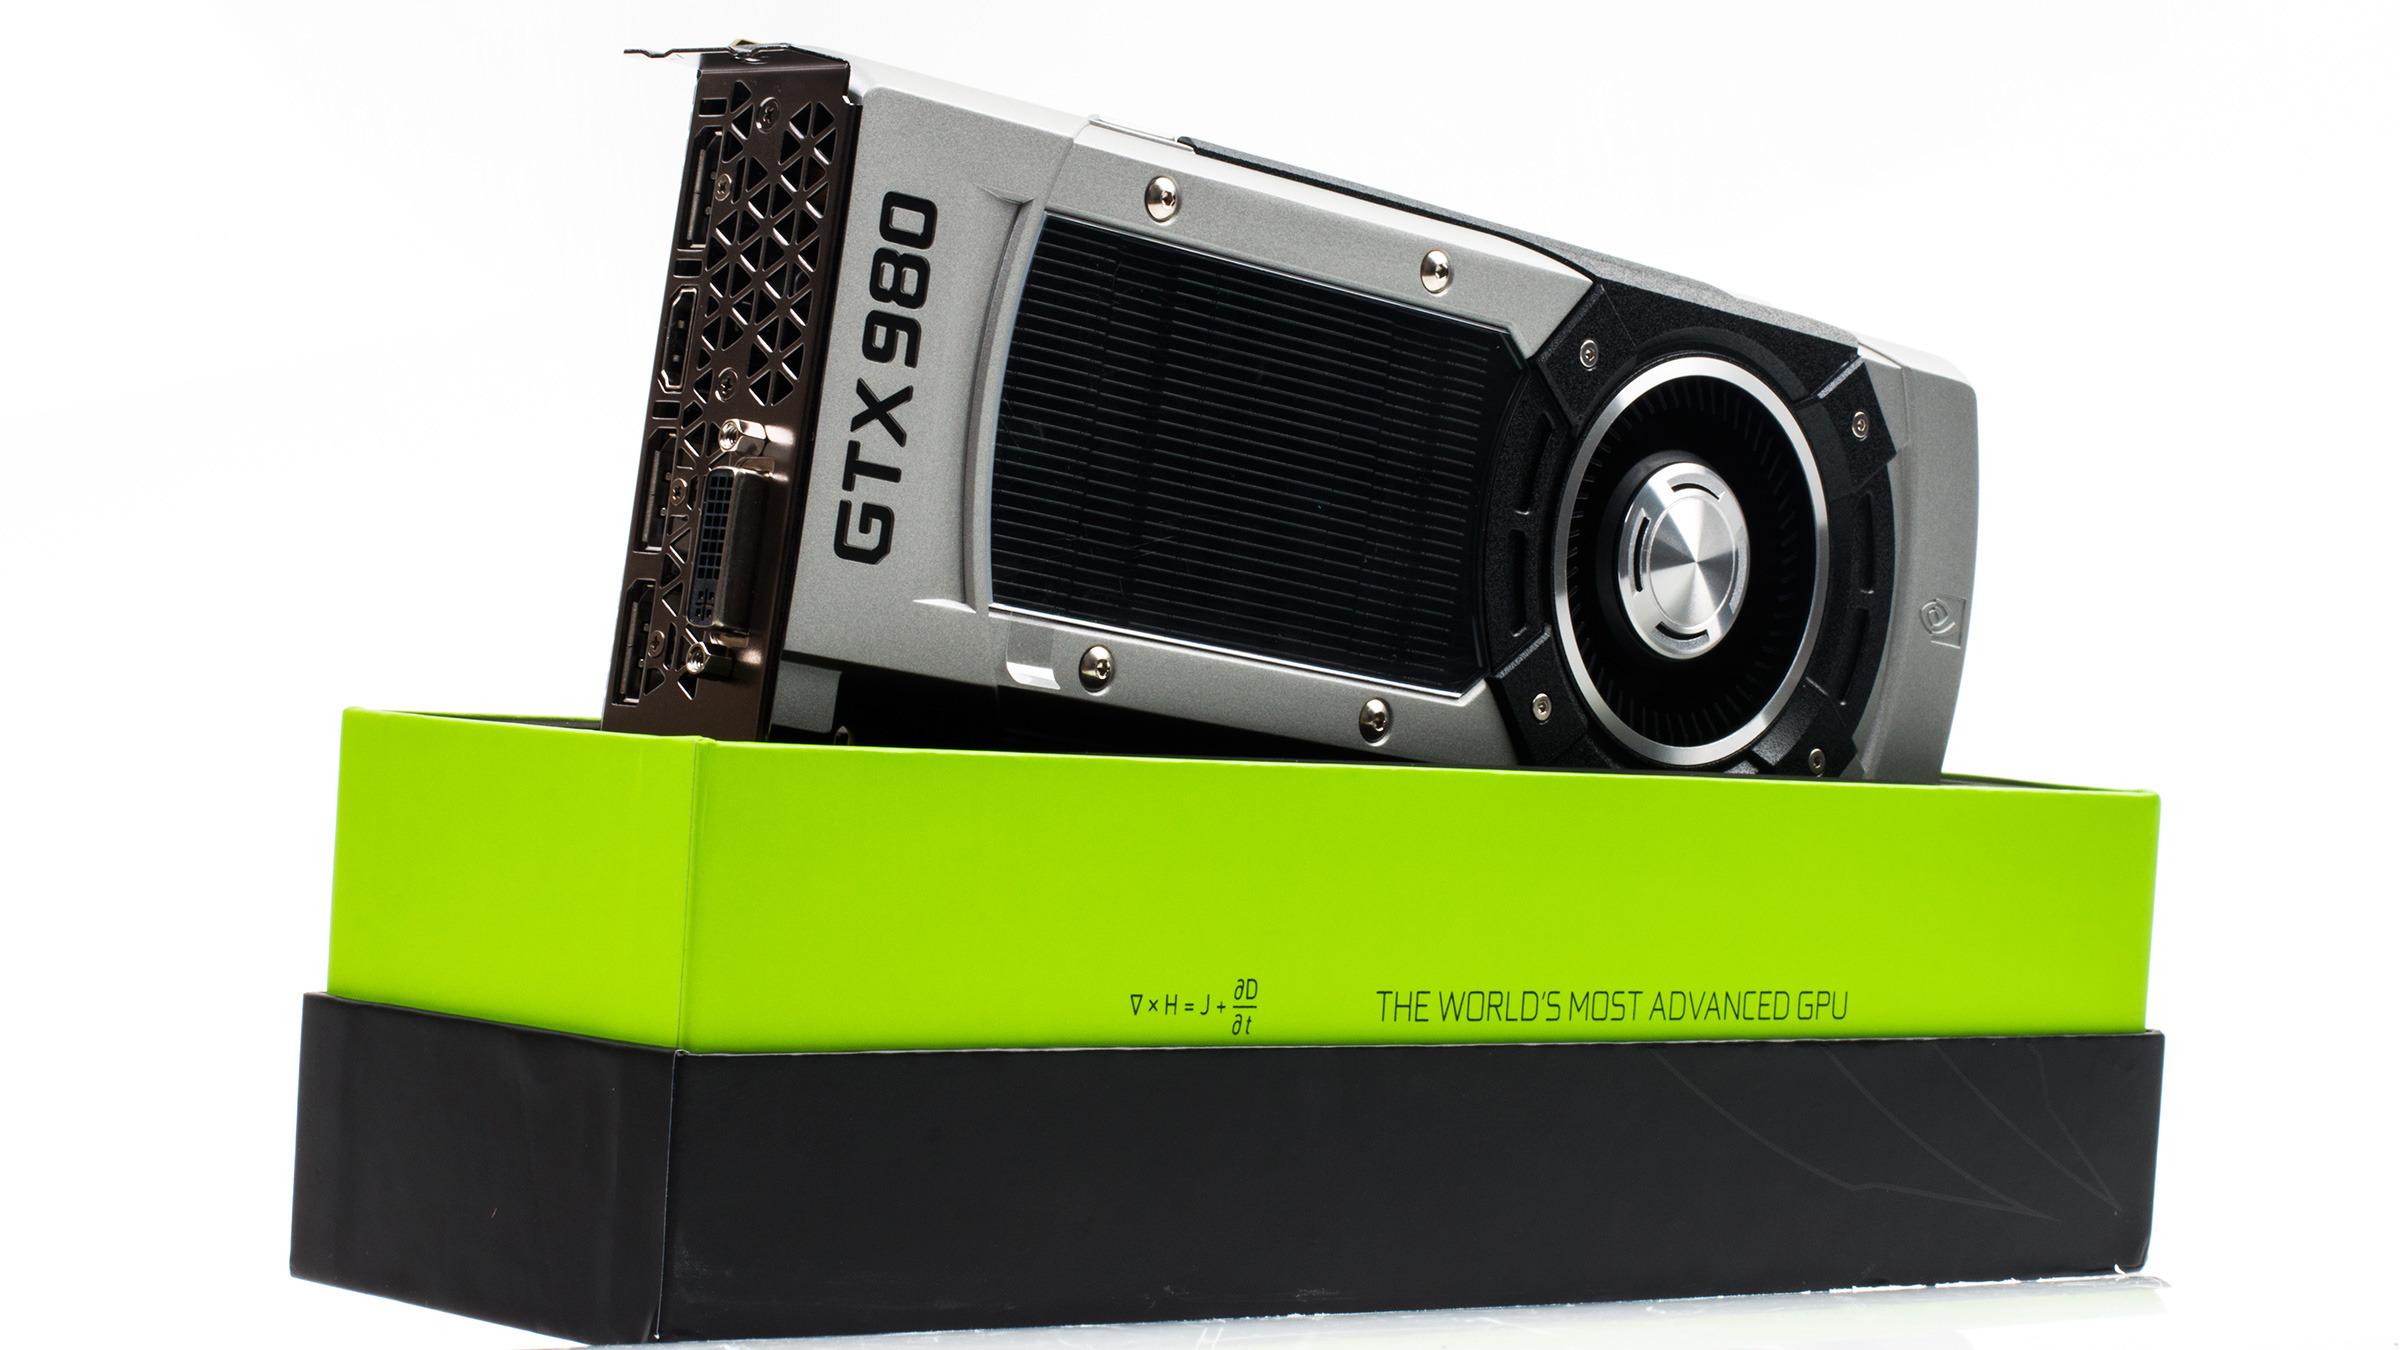 Vårt testeksemplar av nye Nvidia GeForce GTX 980 kom i en riktig så lekker innpakning.Foto: Varg Aamo, Tek.no